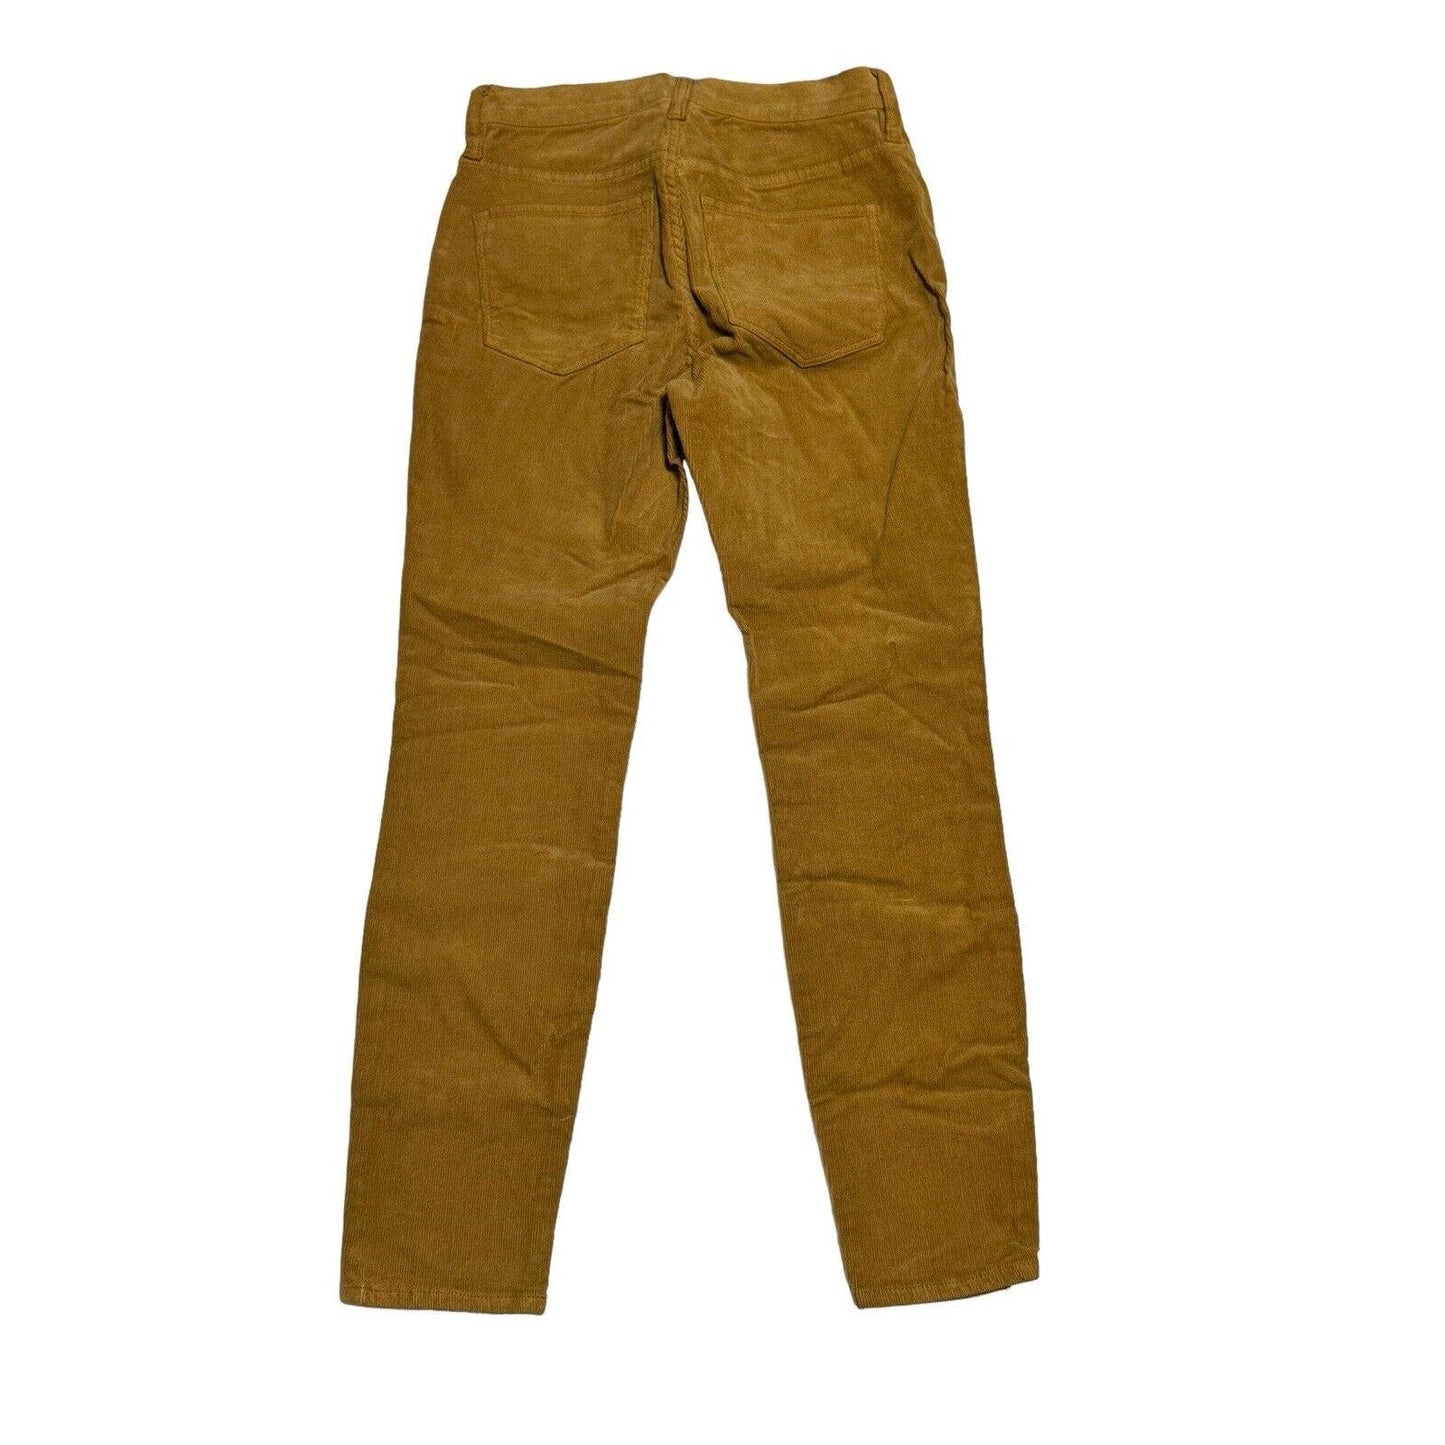 J.CREW 9" High-Rise Toothpick Corduroy Pants Size 25 Petite Skinny Mustard J7172